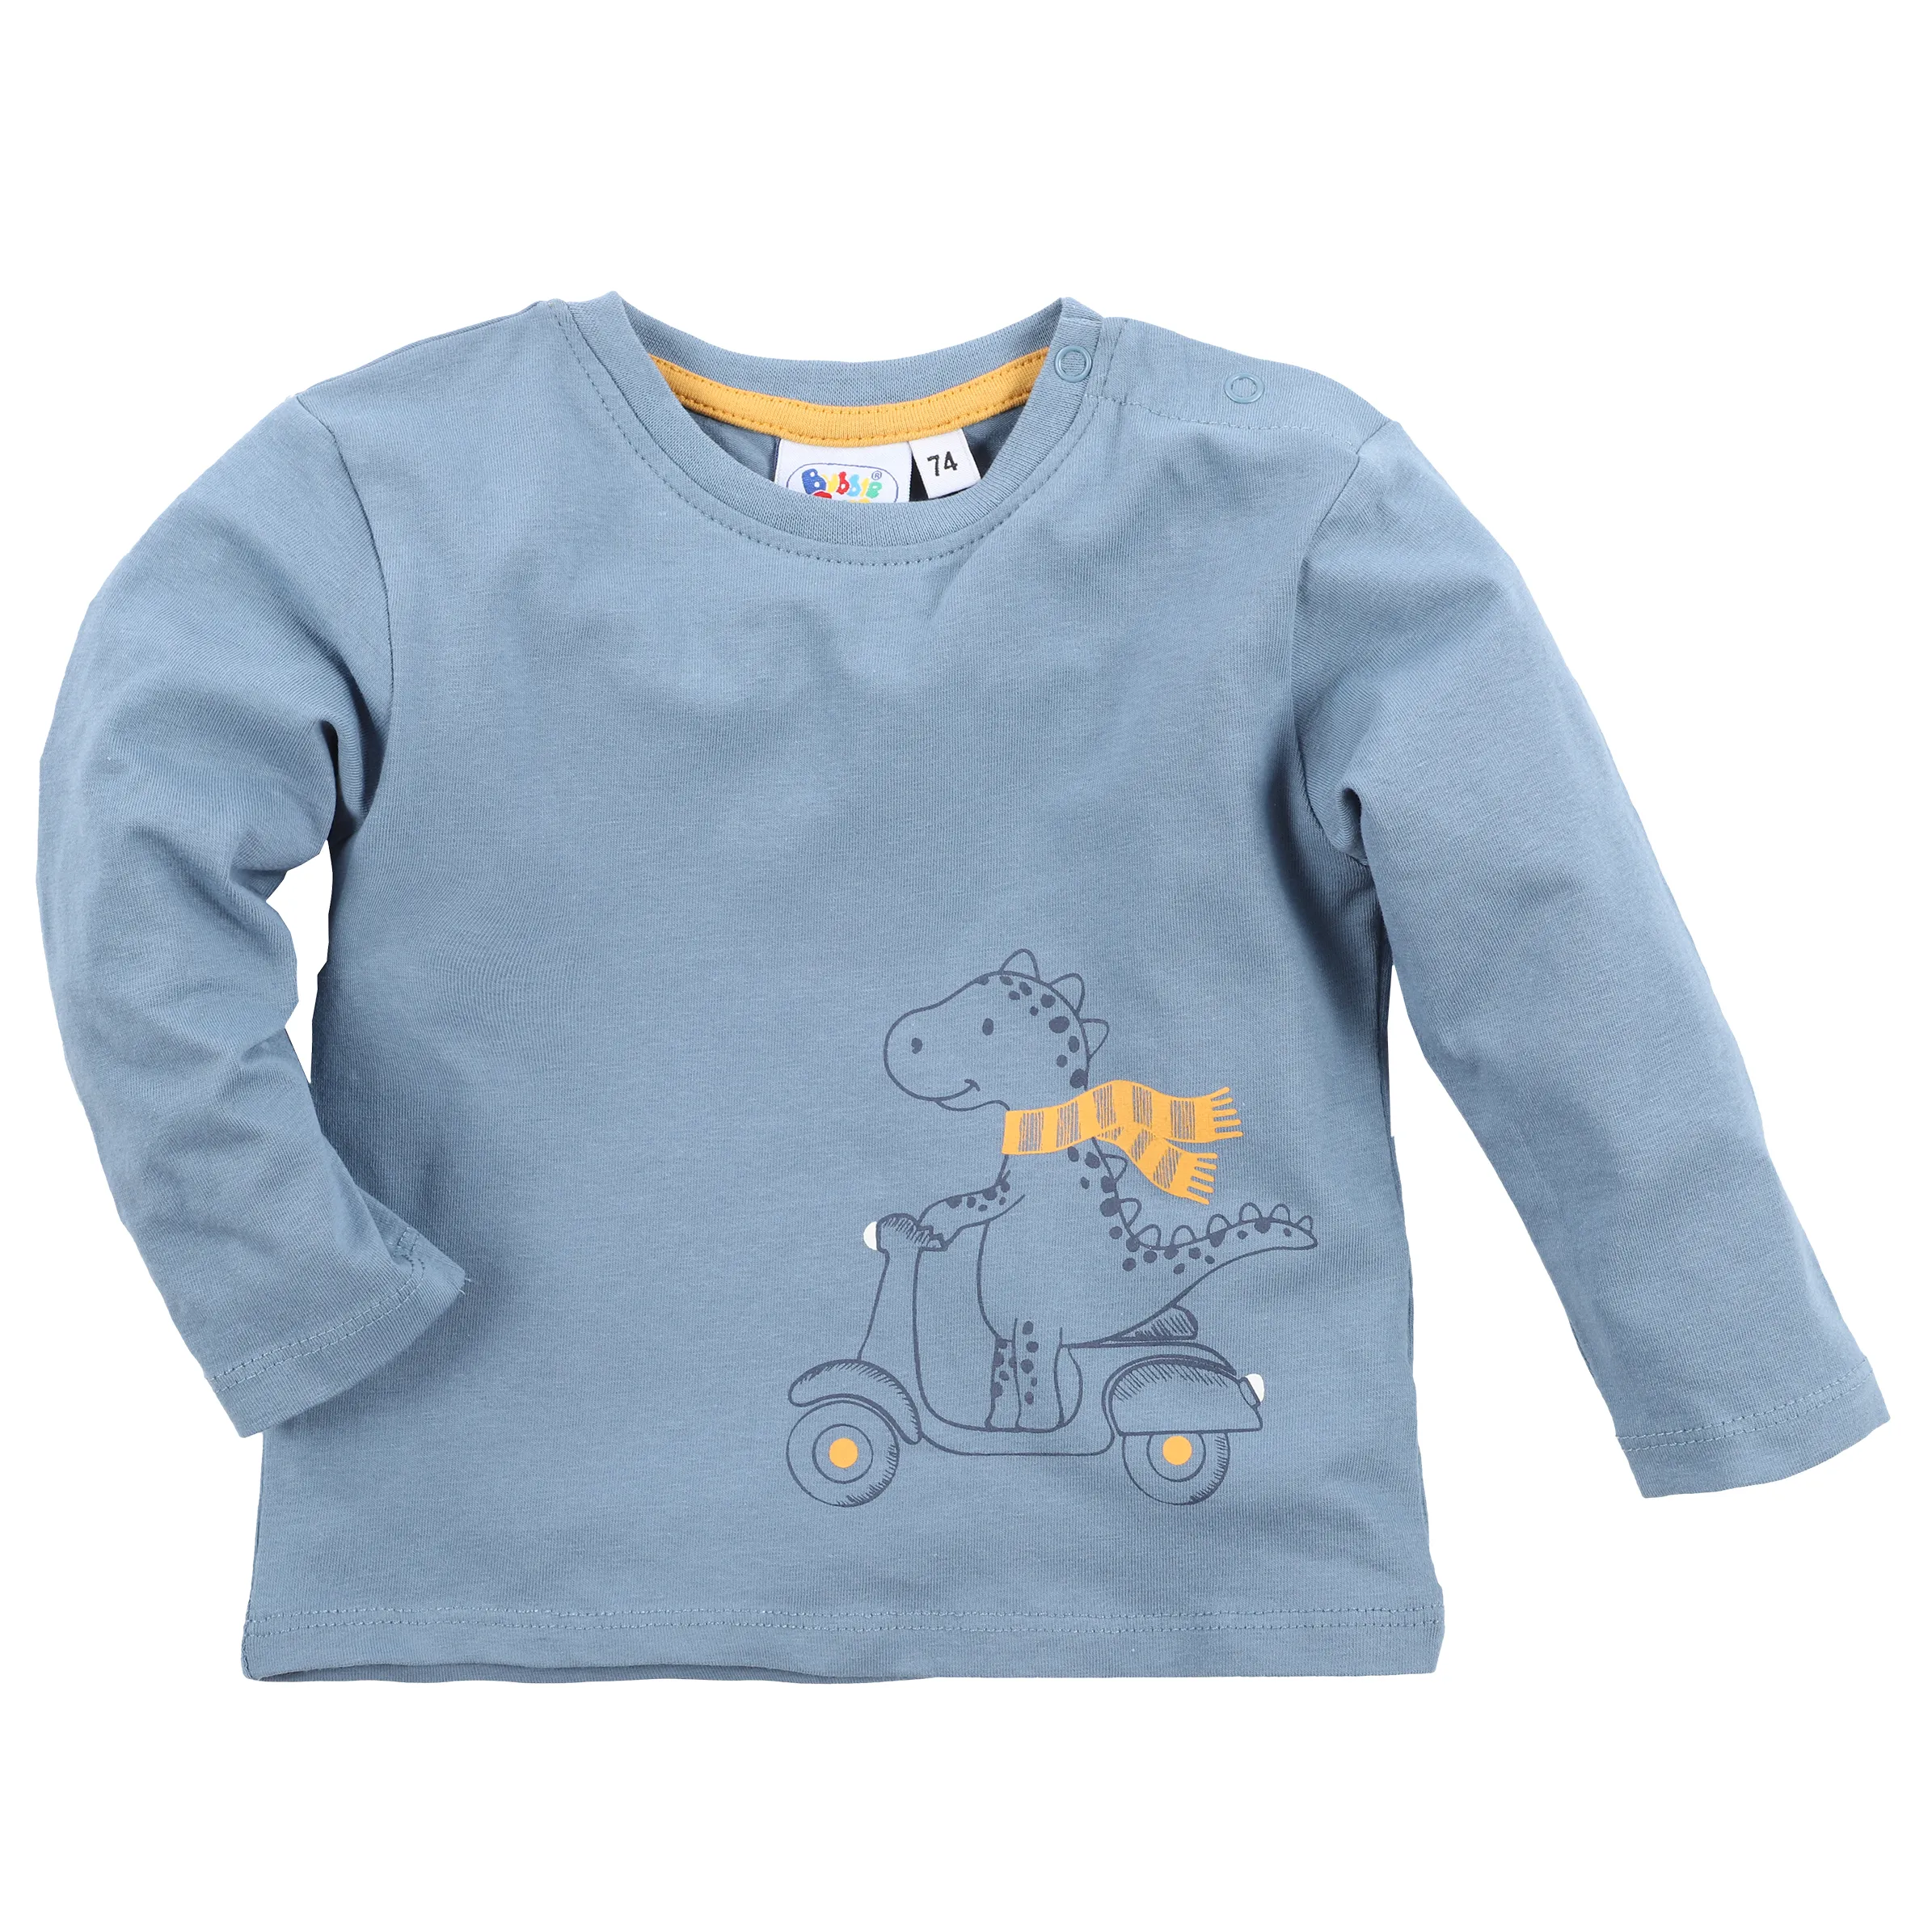 Bubble Gum BJ Longsleeve Shirt mit Dinoprint in hellblau Blau 889910 HELLBLAU 1